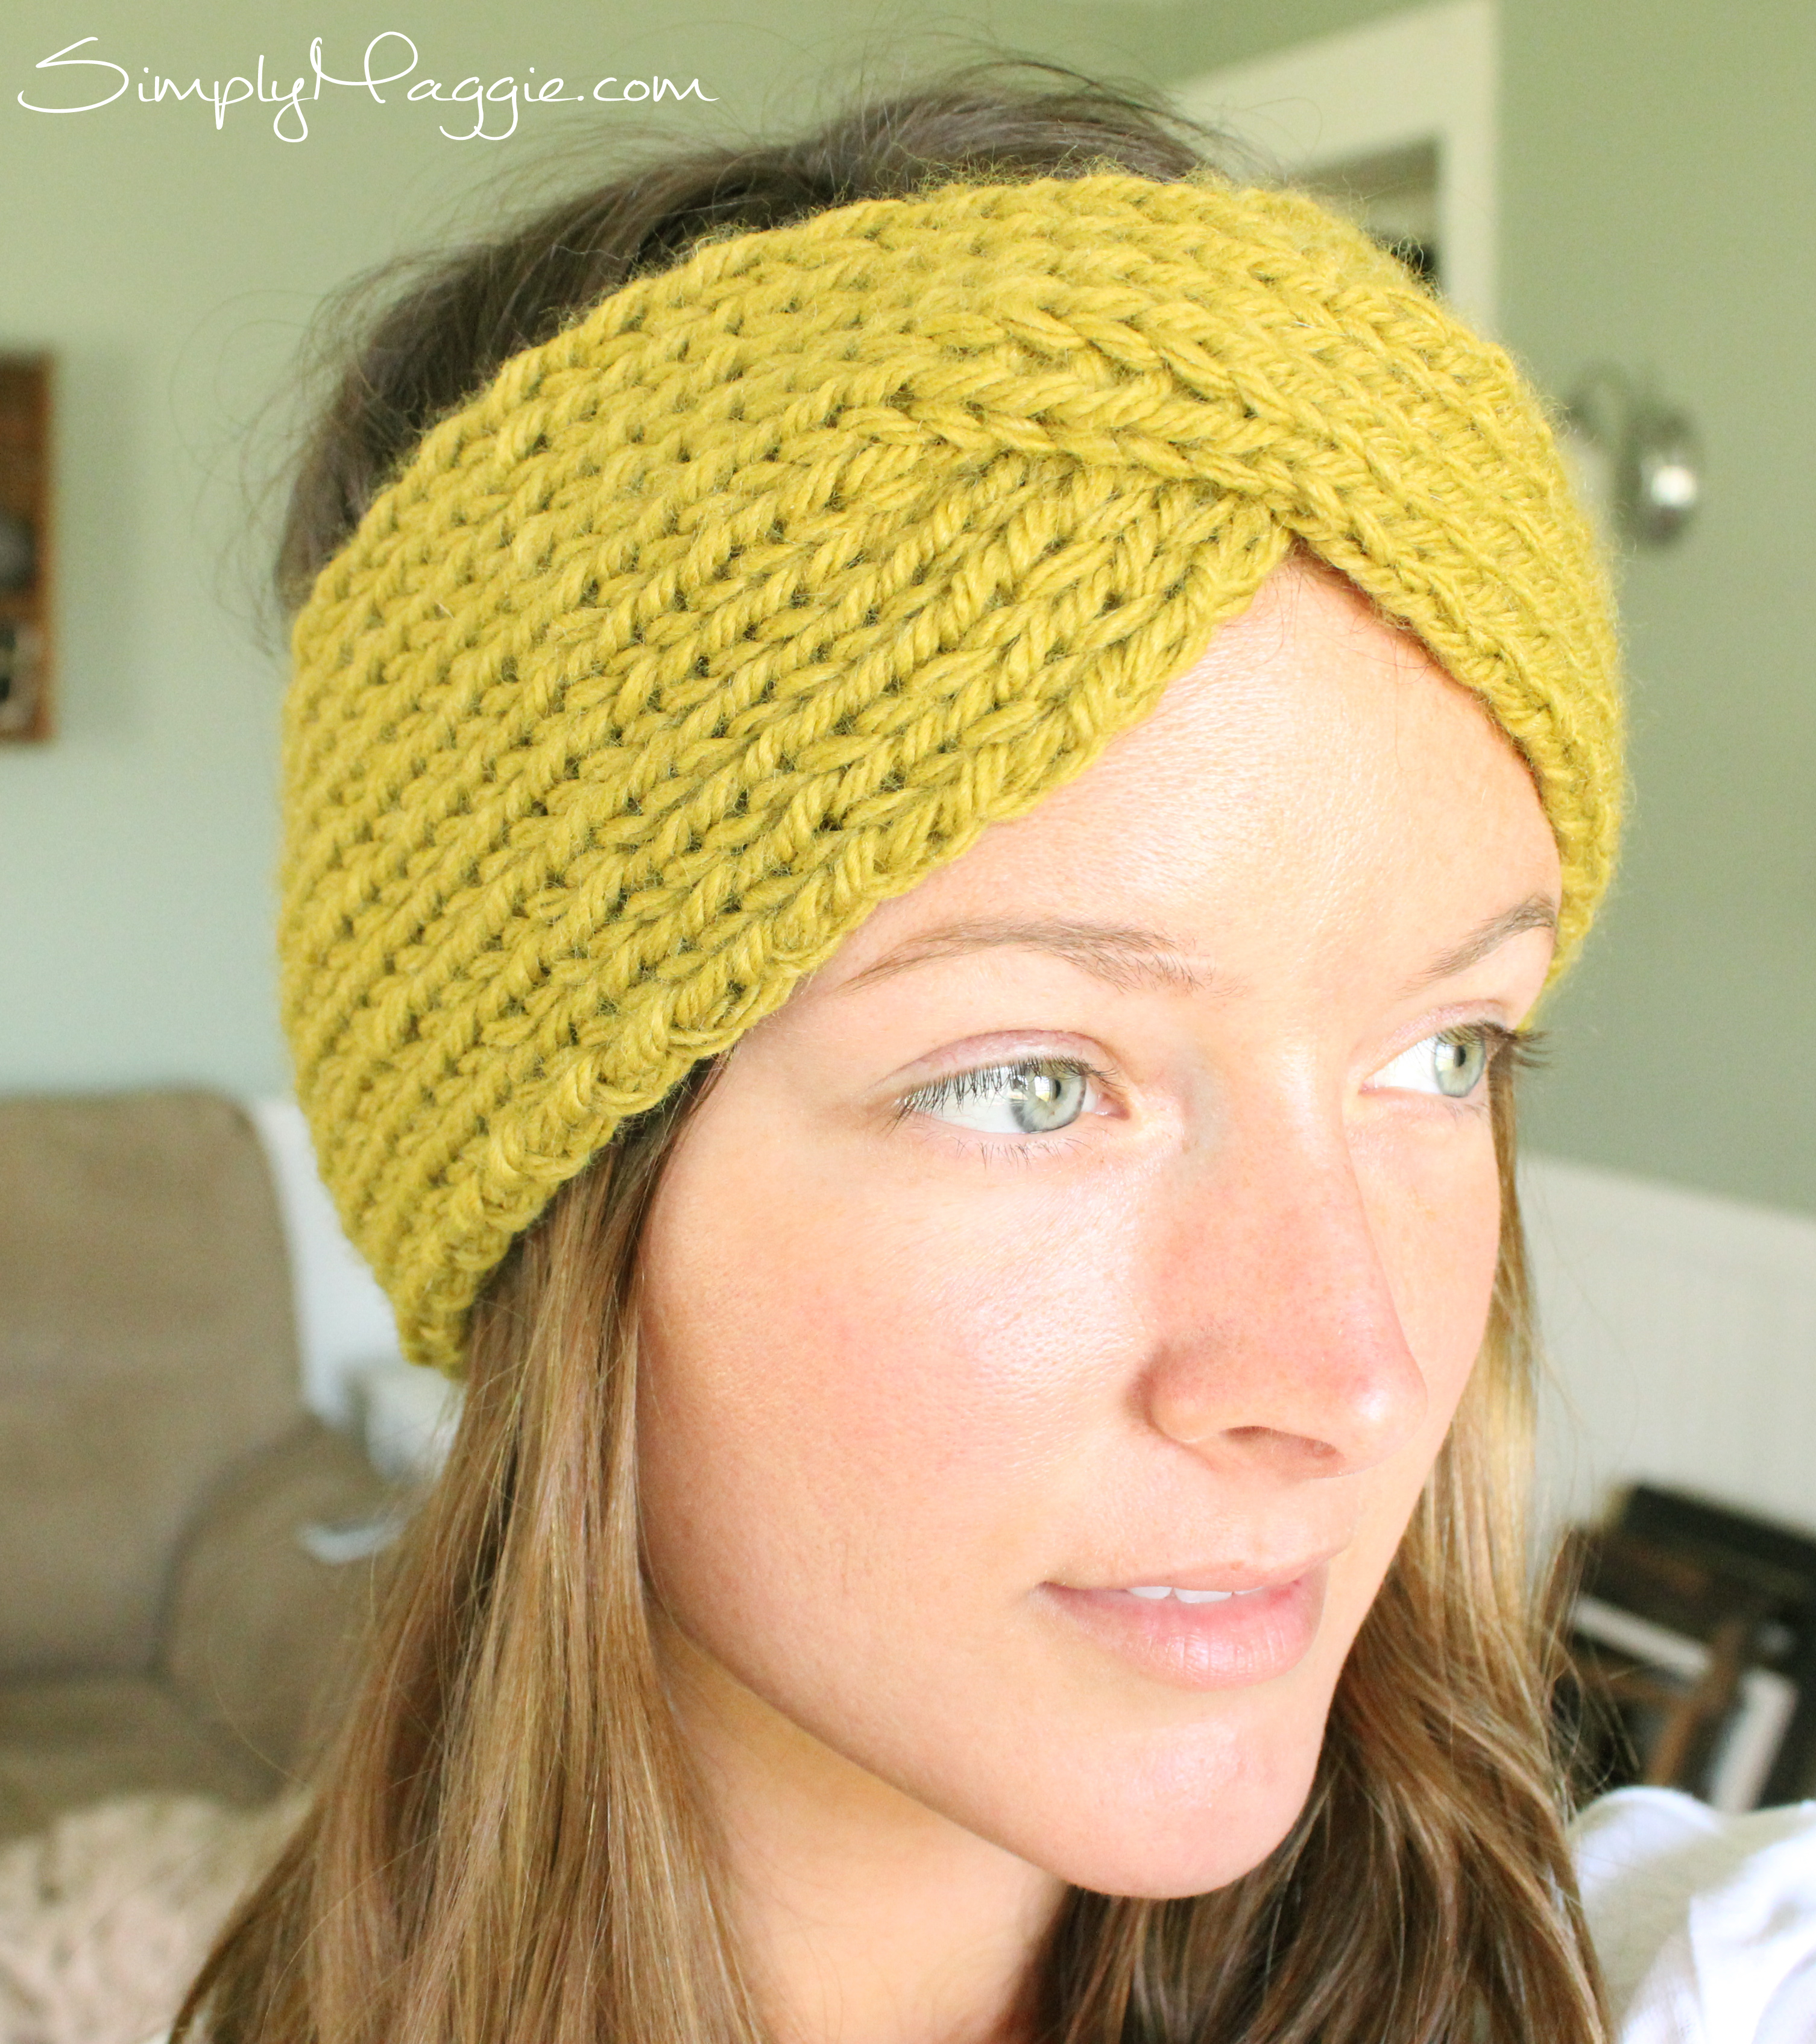 Knit Headband With Flower Pattern Turban Style Knit Headband Simplymaggie